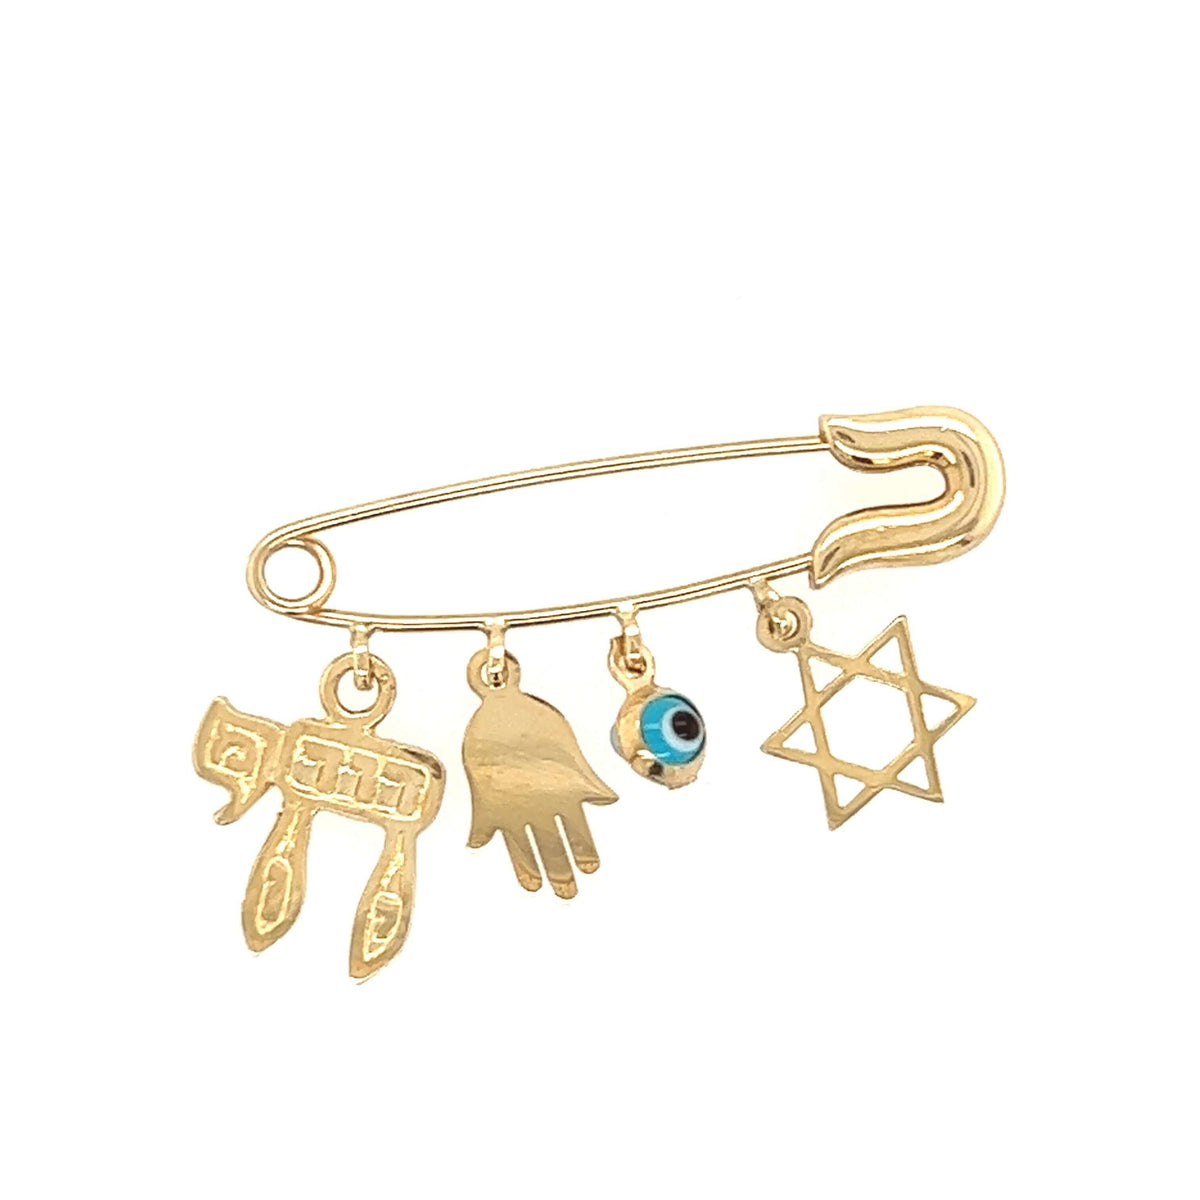 Pin on Jewish